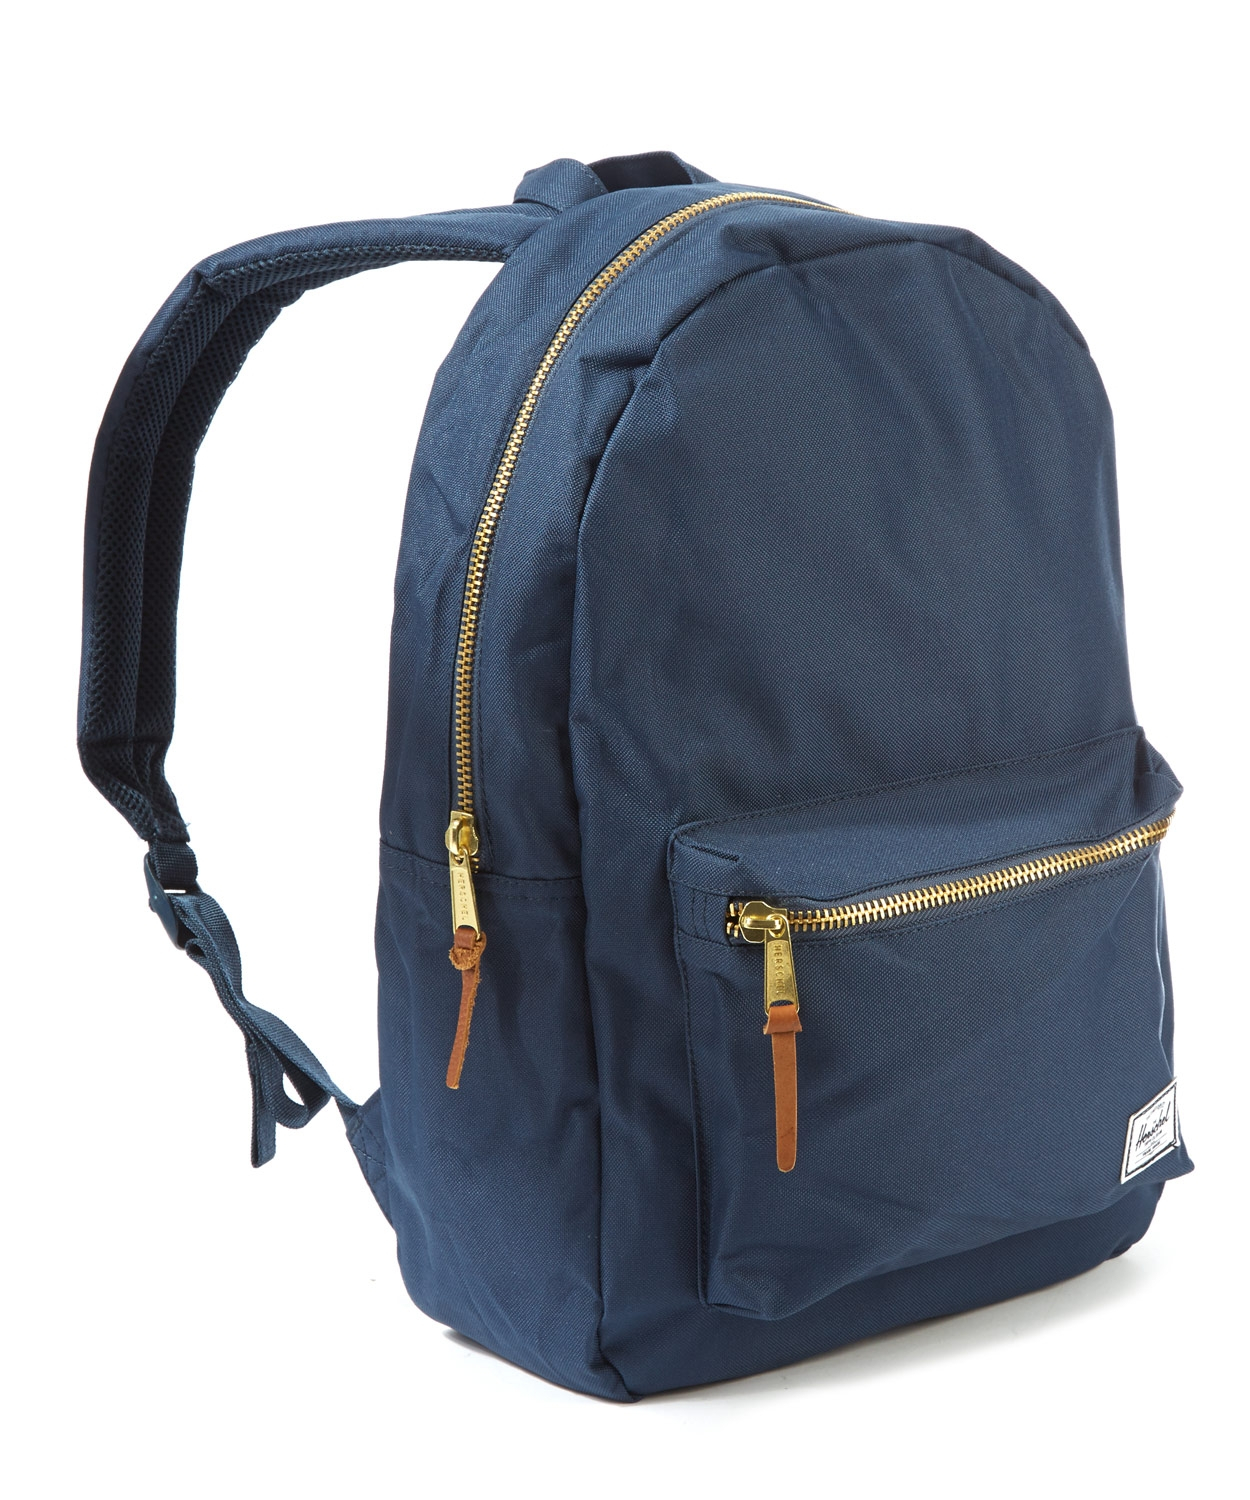 Herschel Supply Co. Settlement Backpack in Blue for Men - Lyst